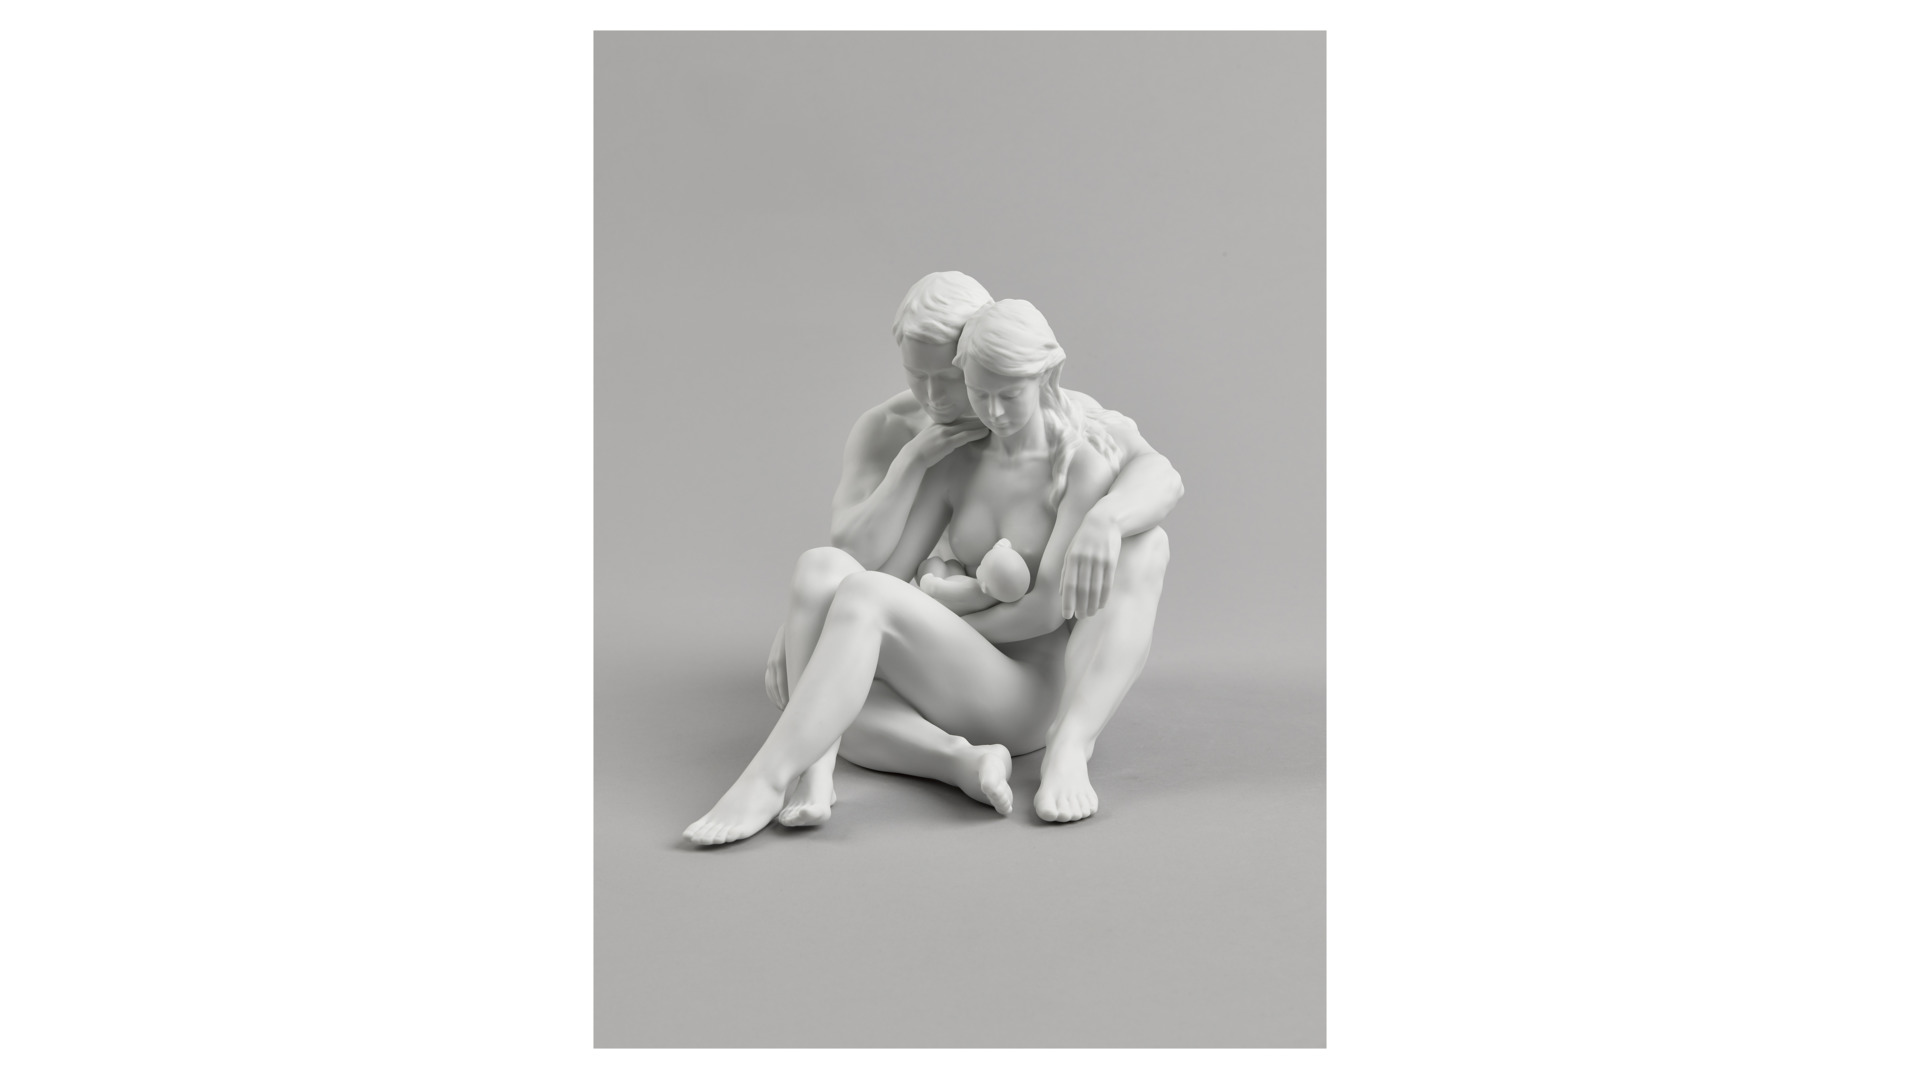 Фигурка Lladro Сущность жизни 25х23 см, фарфор